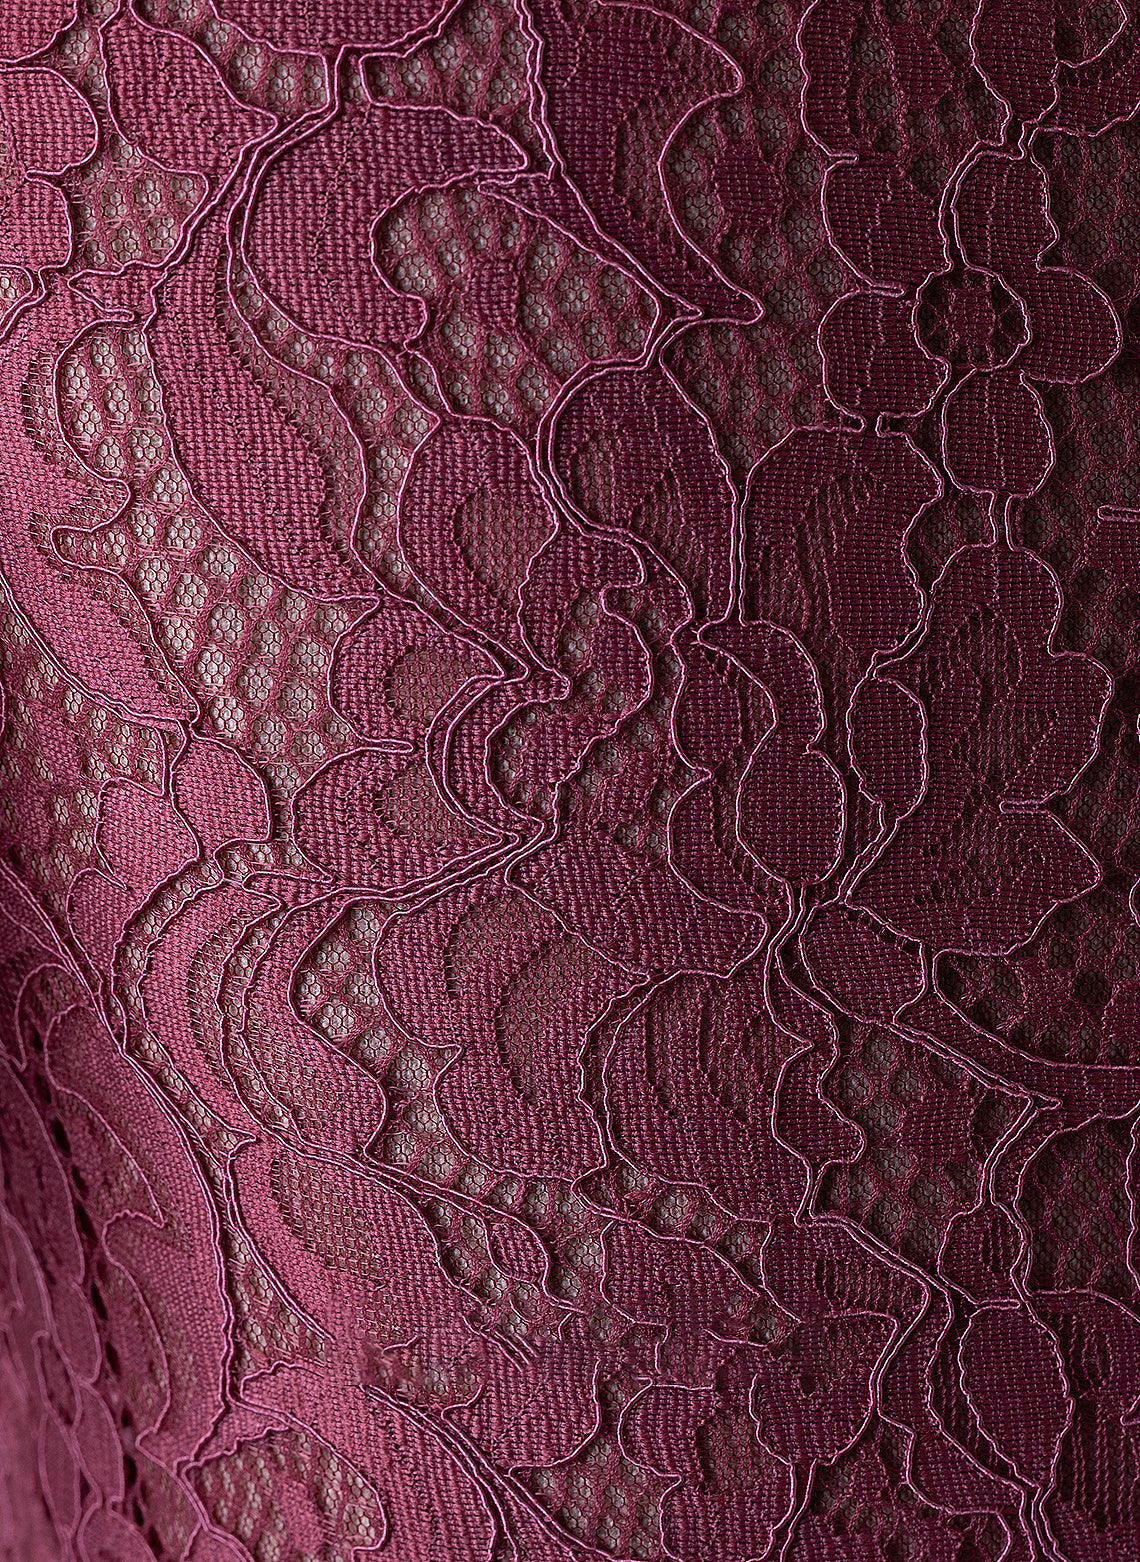 Silhouette V-neck Ruffle Fabric Embellishment Neckline A-Line Length Asymmetrical Janelle A-Line/Princess Floor Length Bridesmaid Dresses